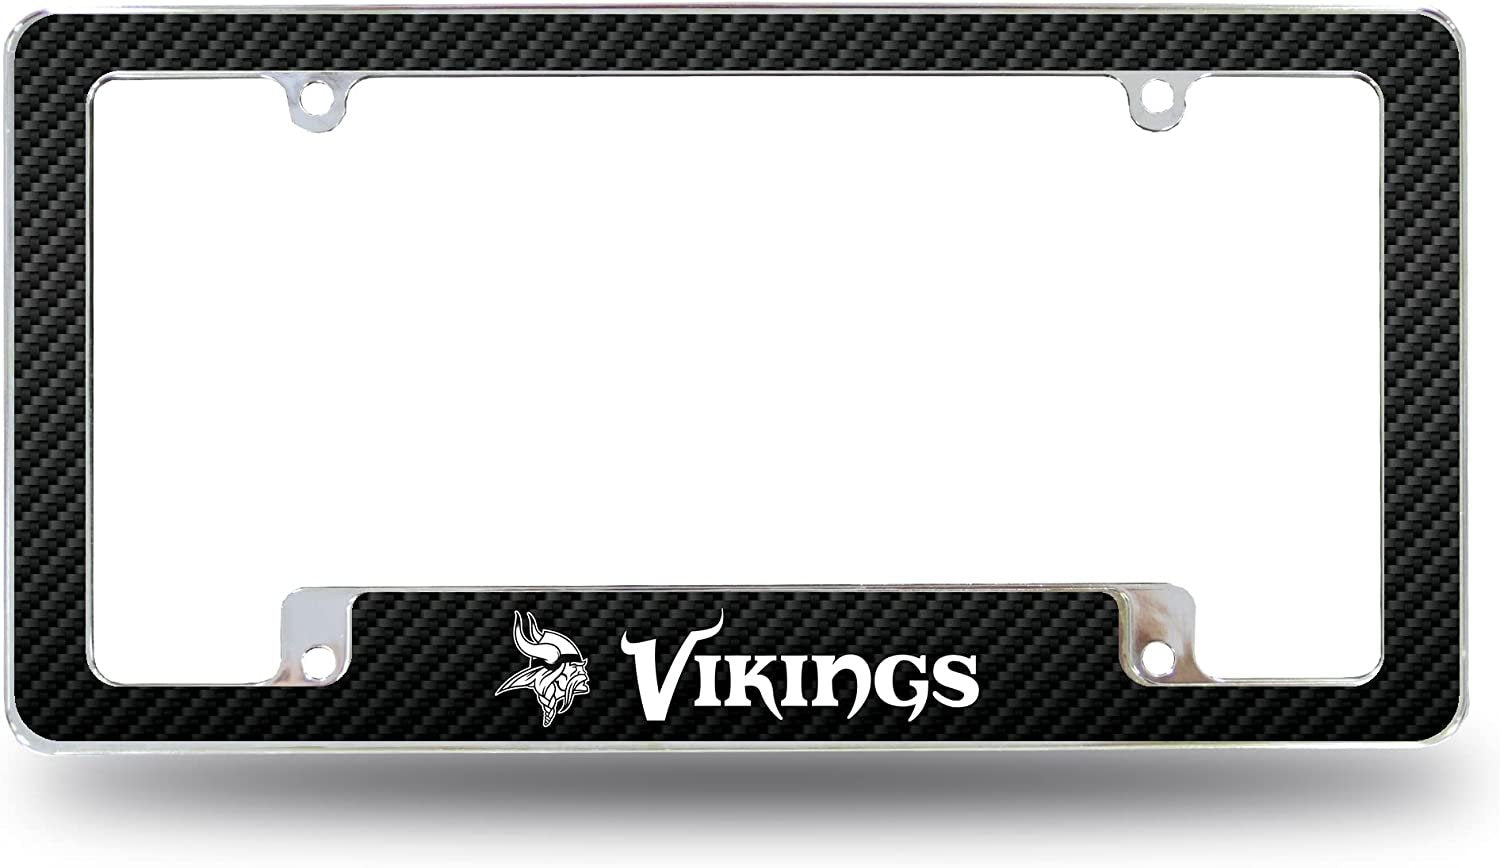 Minnesota Vikings Metal License Plate Frame Chrome Tag Cover Carbon Fiber Design 6x12 Inch